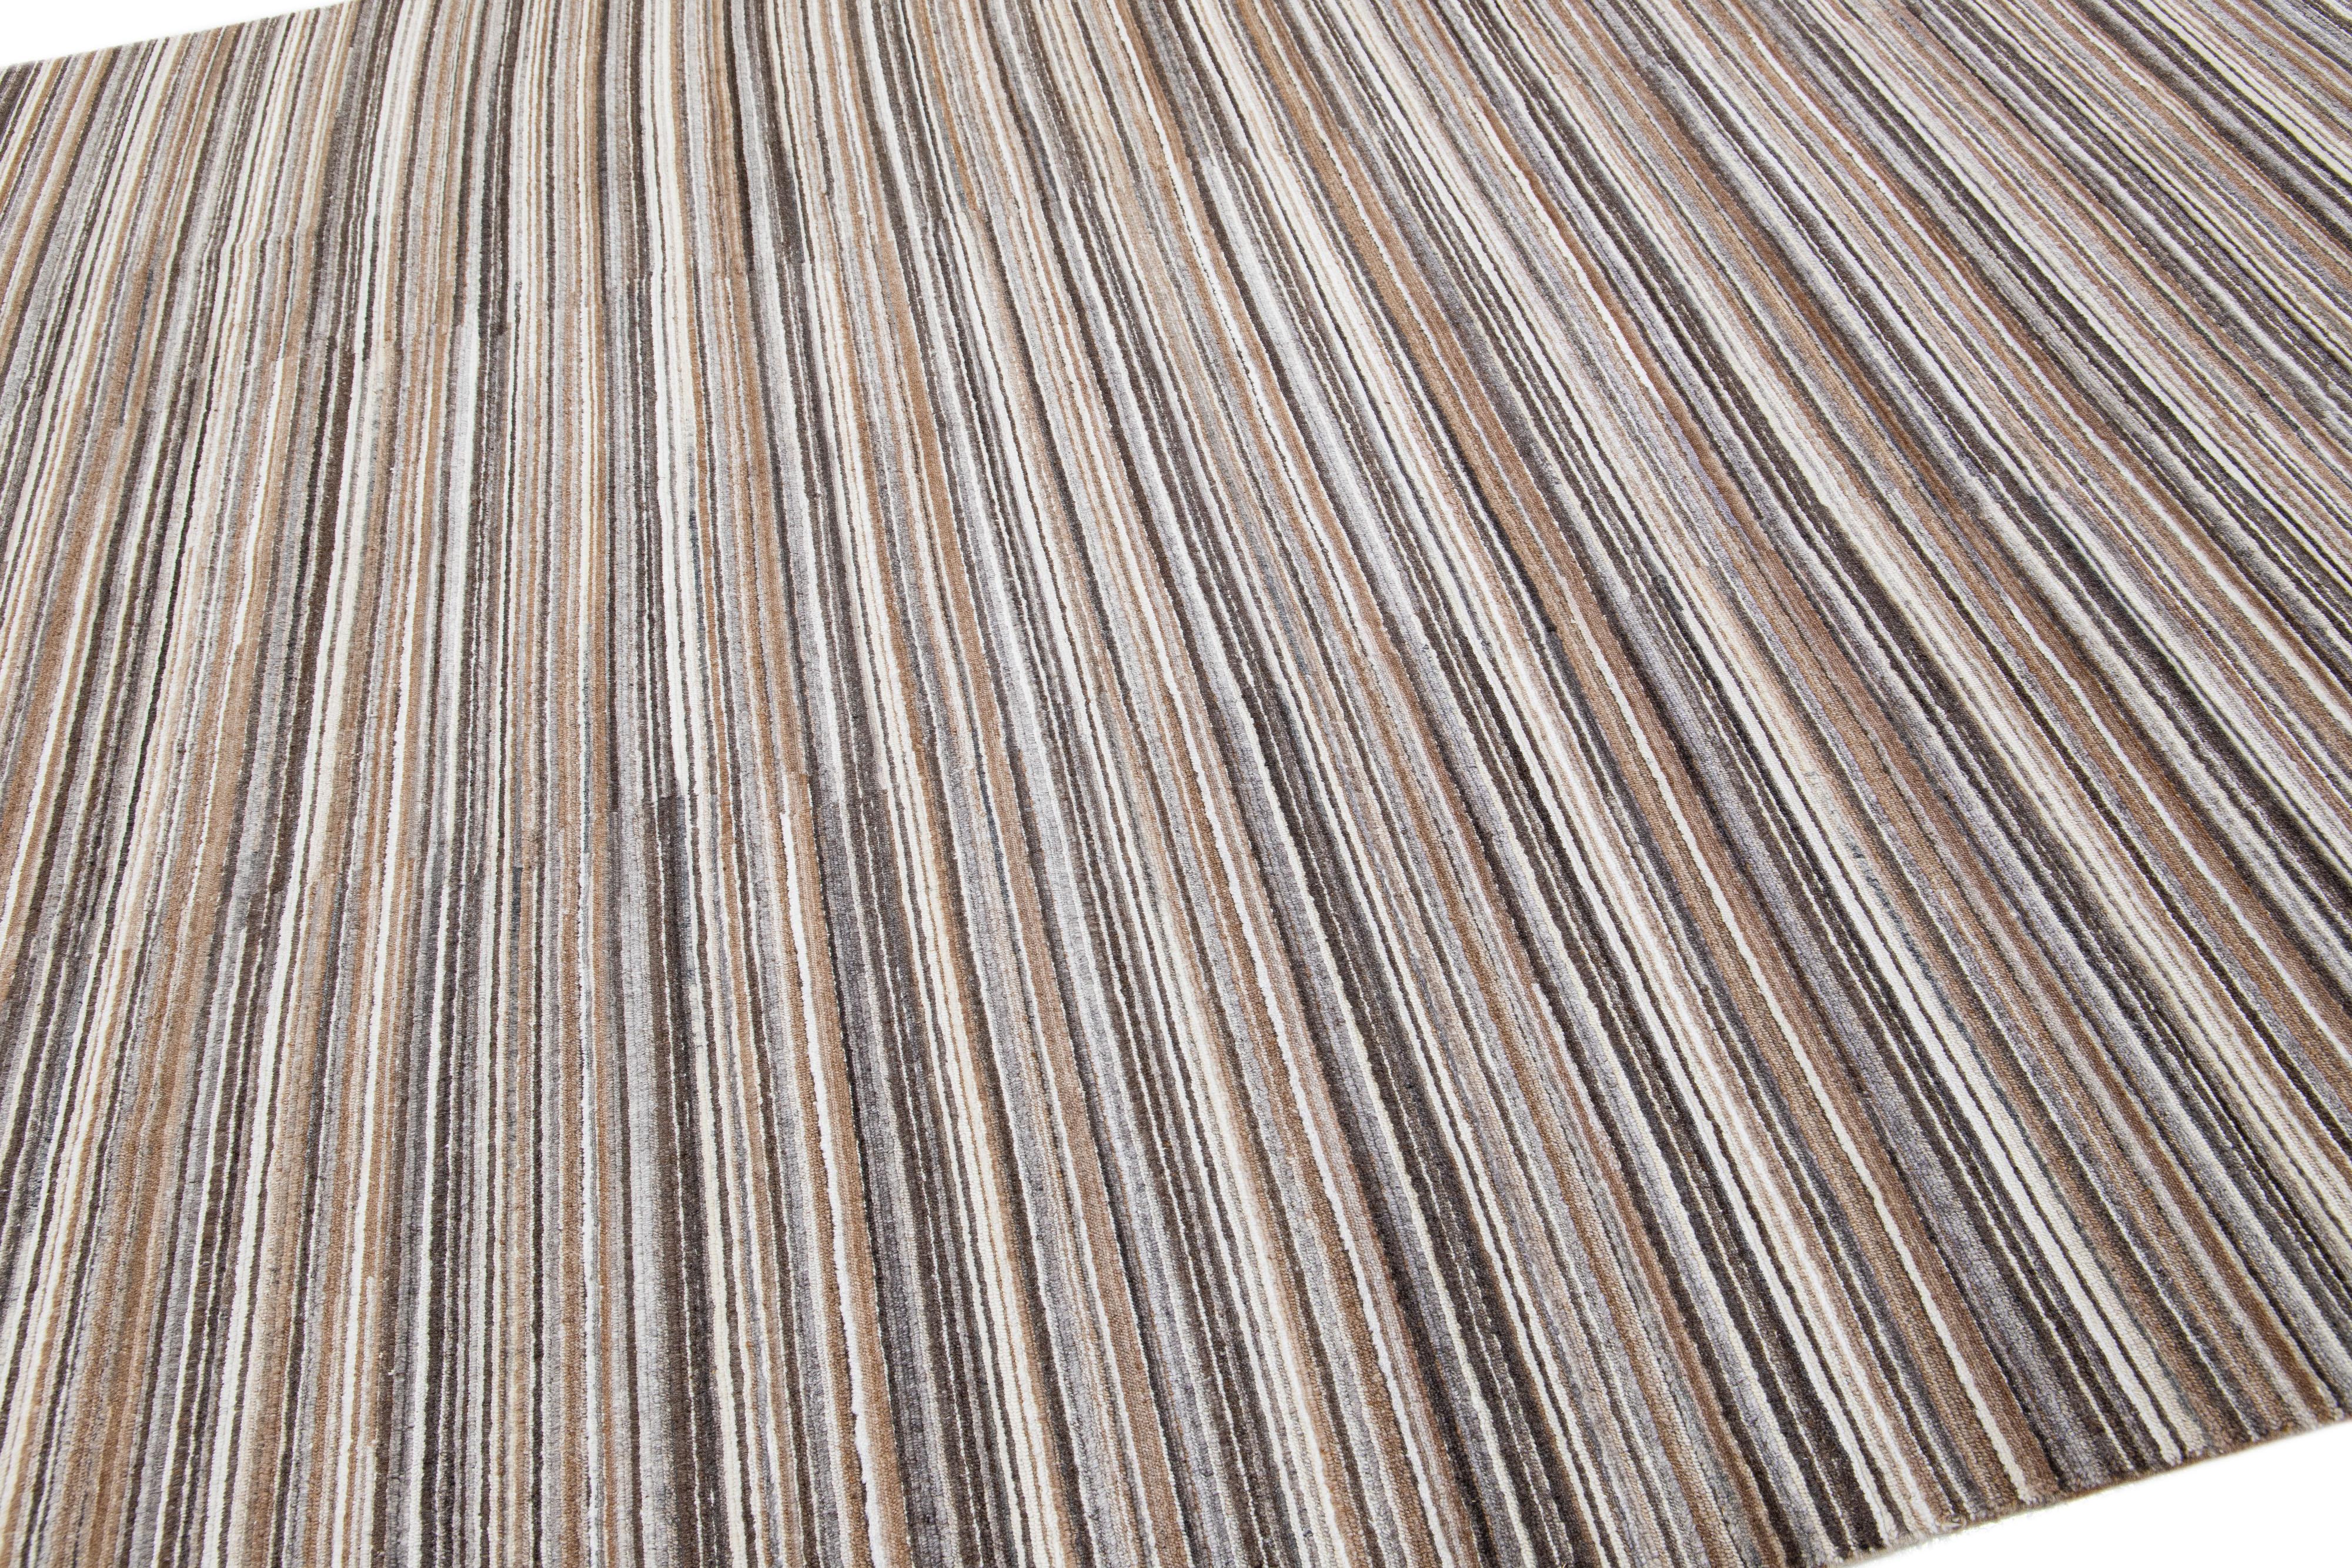 Organic Modern Apadana's Groove Handmade Bamboo/Silk Rug with Stripe Motif in Earthy Tones For Sale